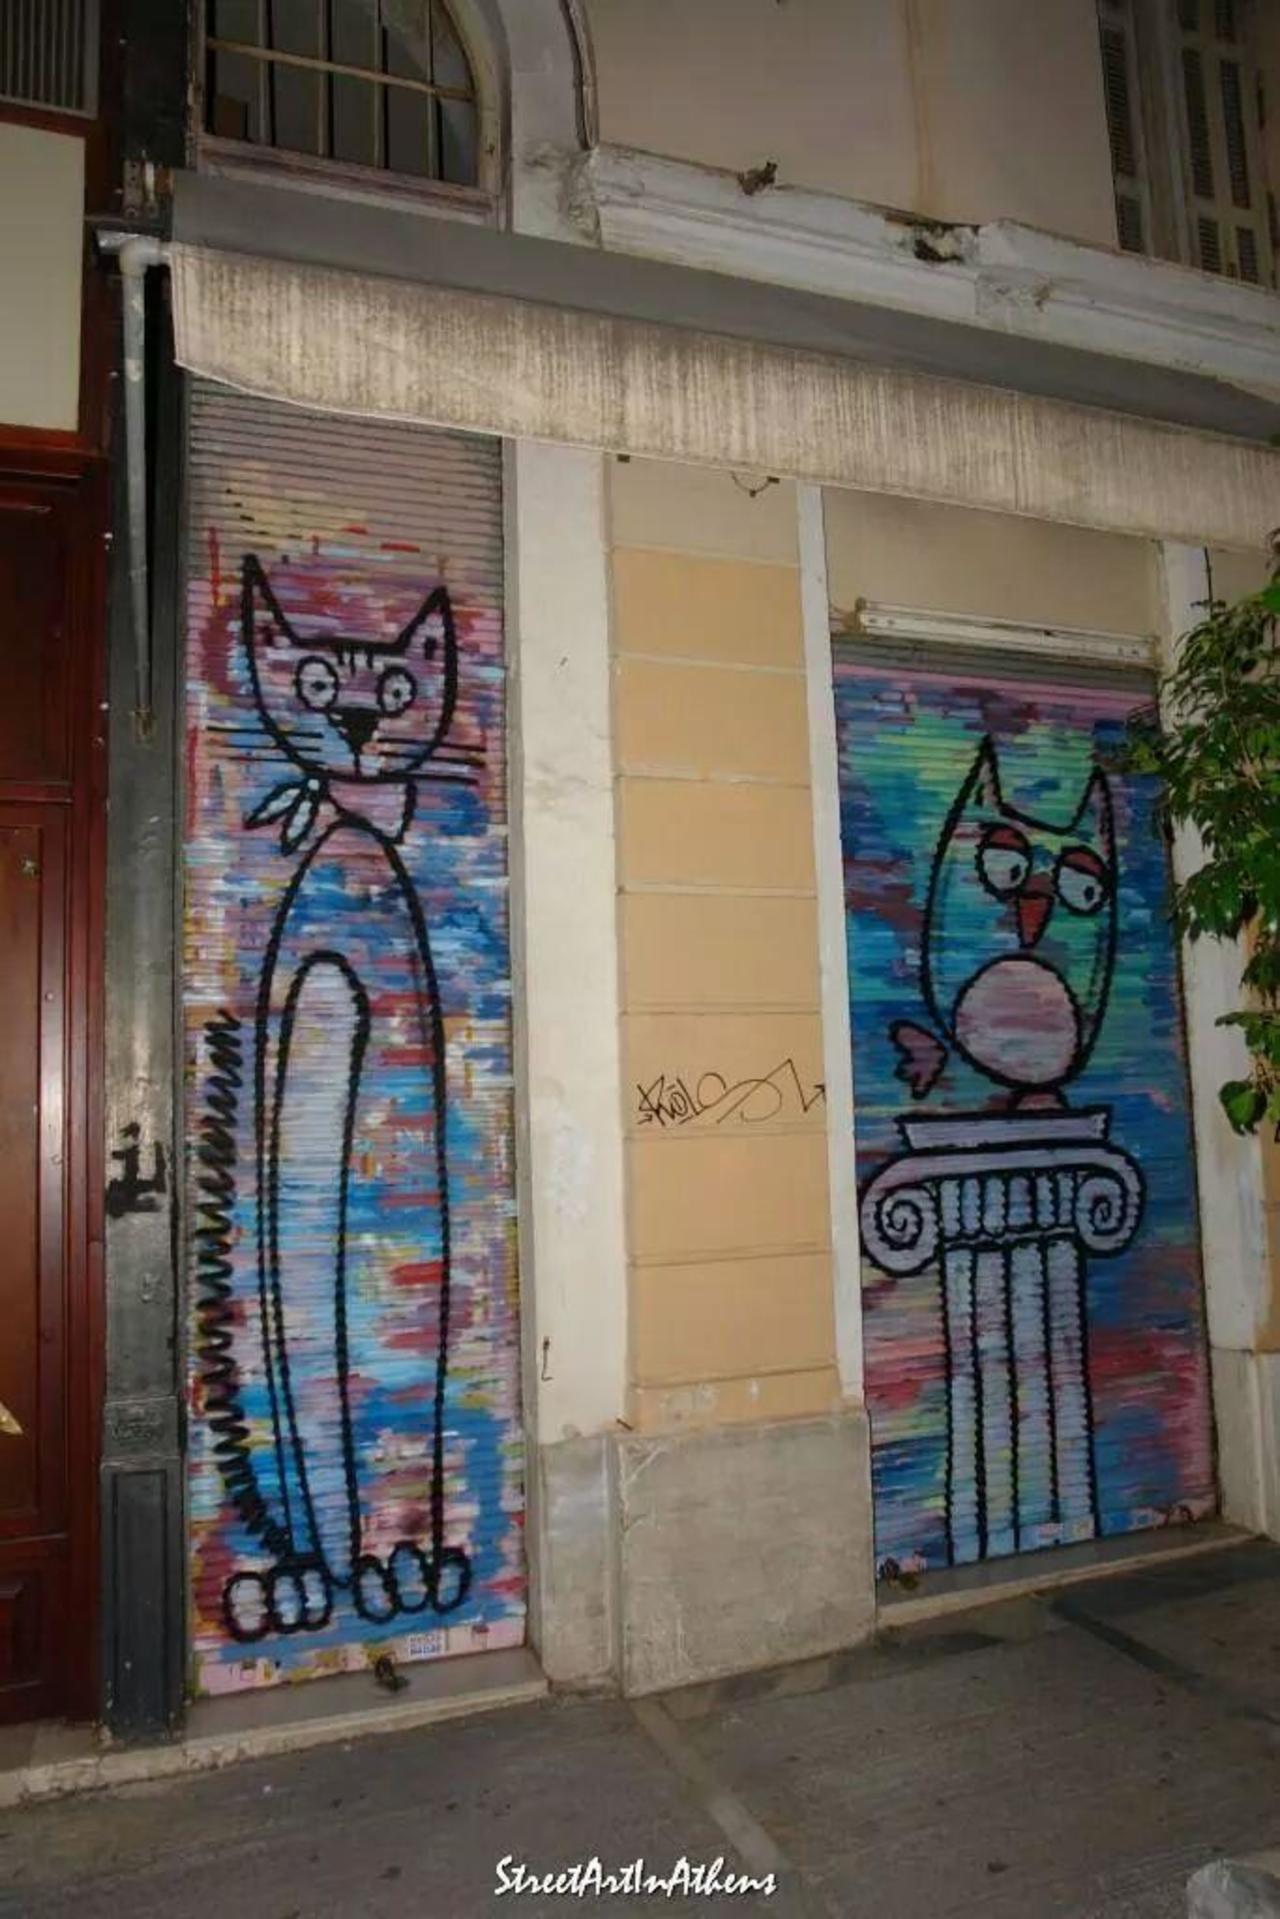 Artist? #greece #mural #spraypaint #streetart #stencil #graffiti #urbanart #art http://t.co/vqRu3keoWo